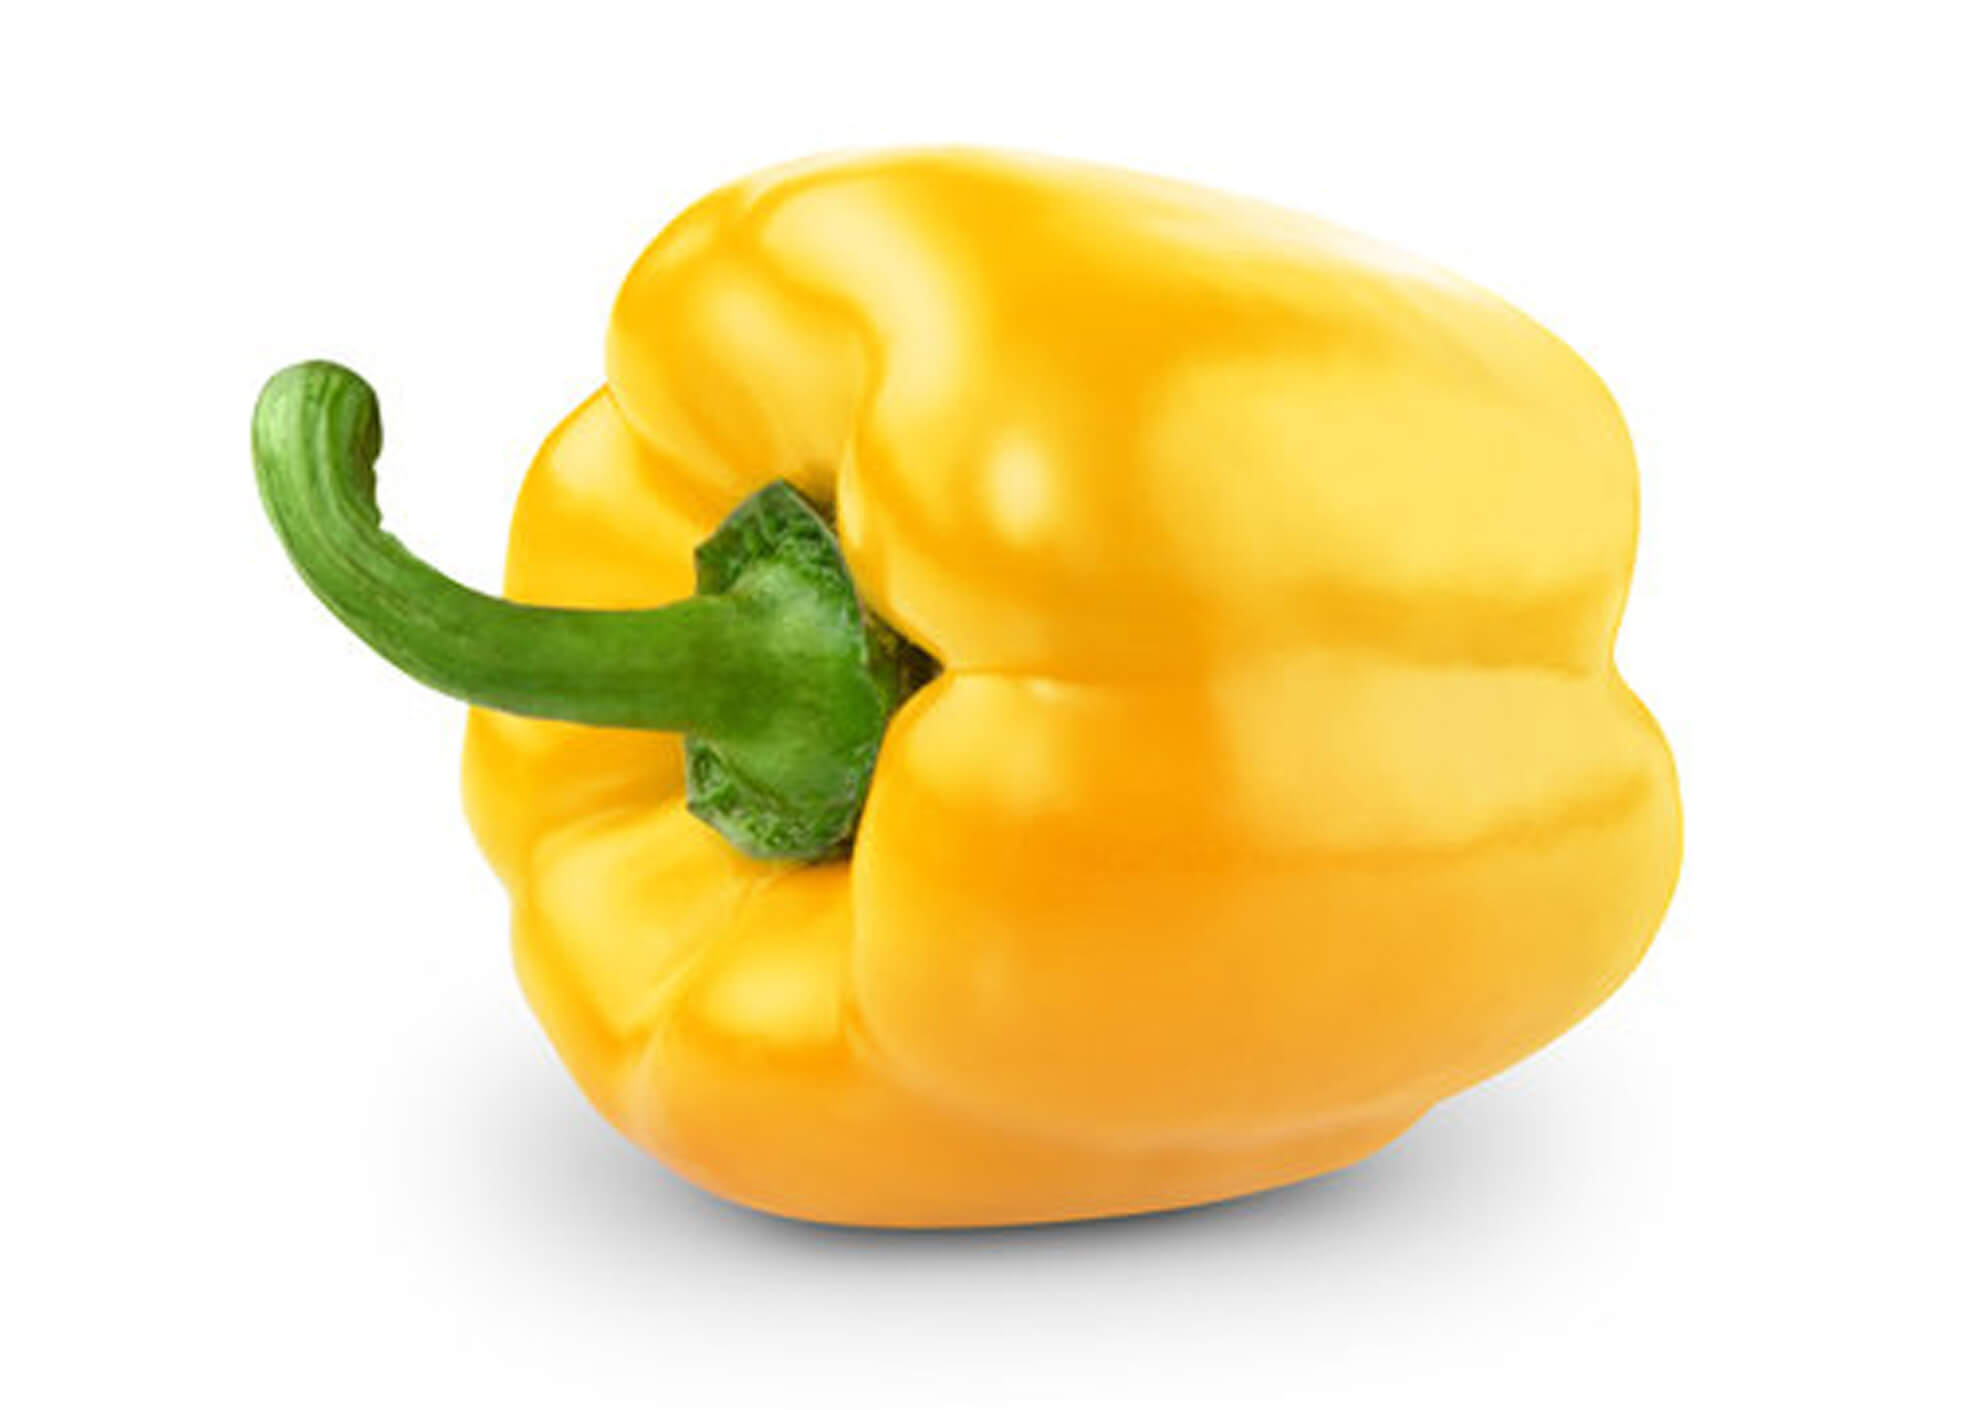 yellow paprika